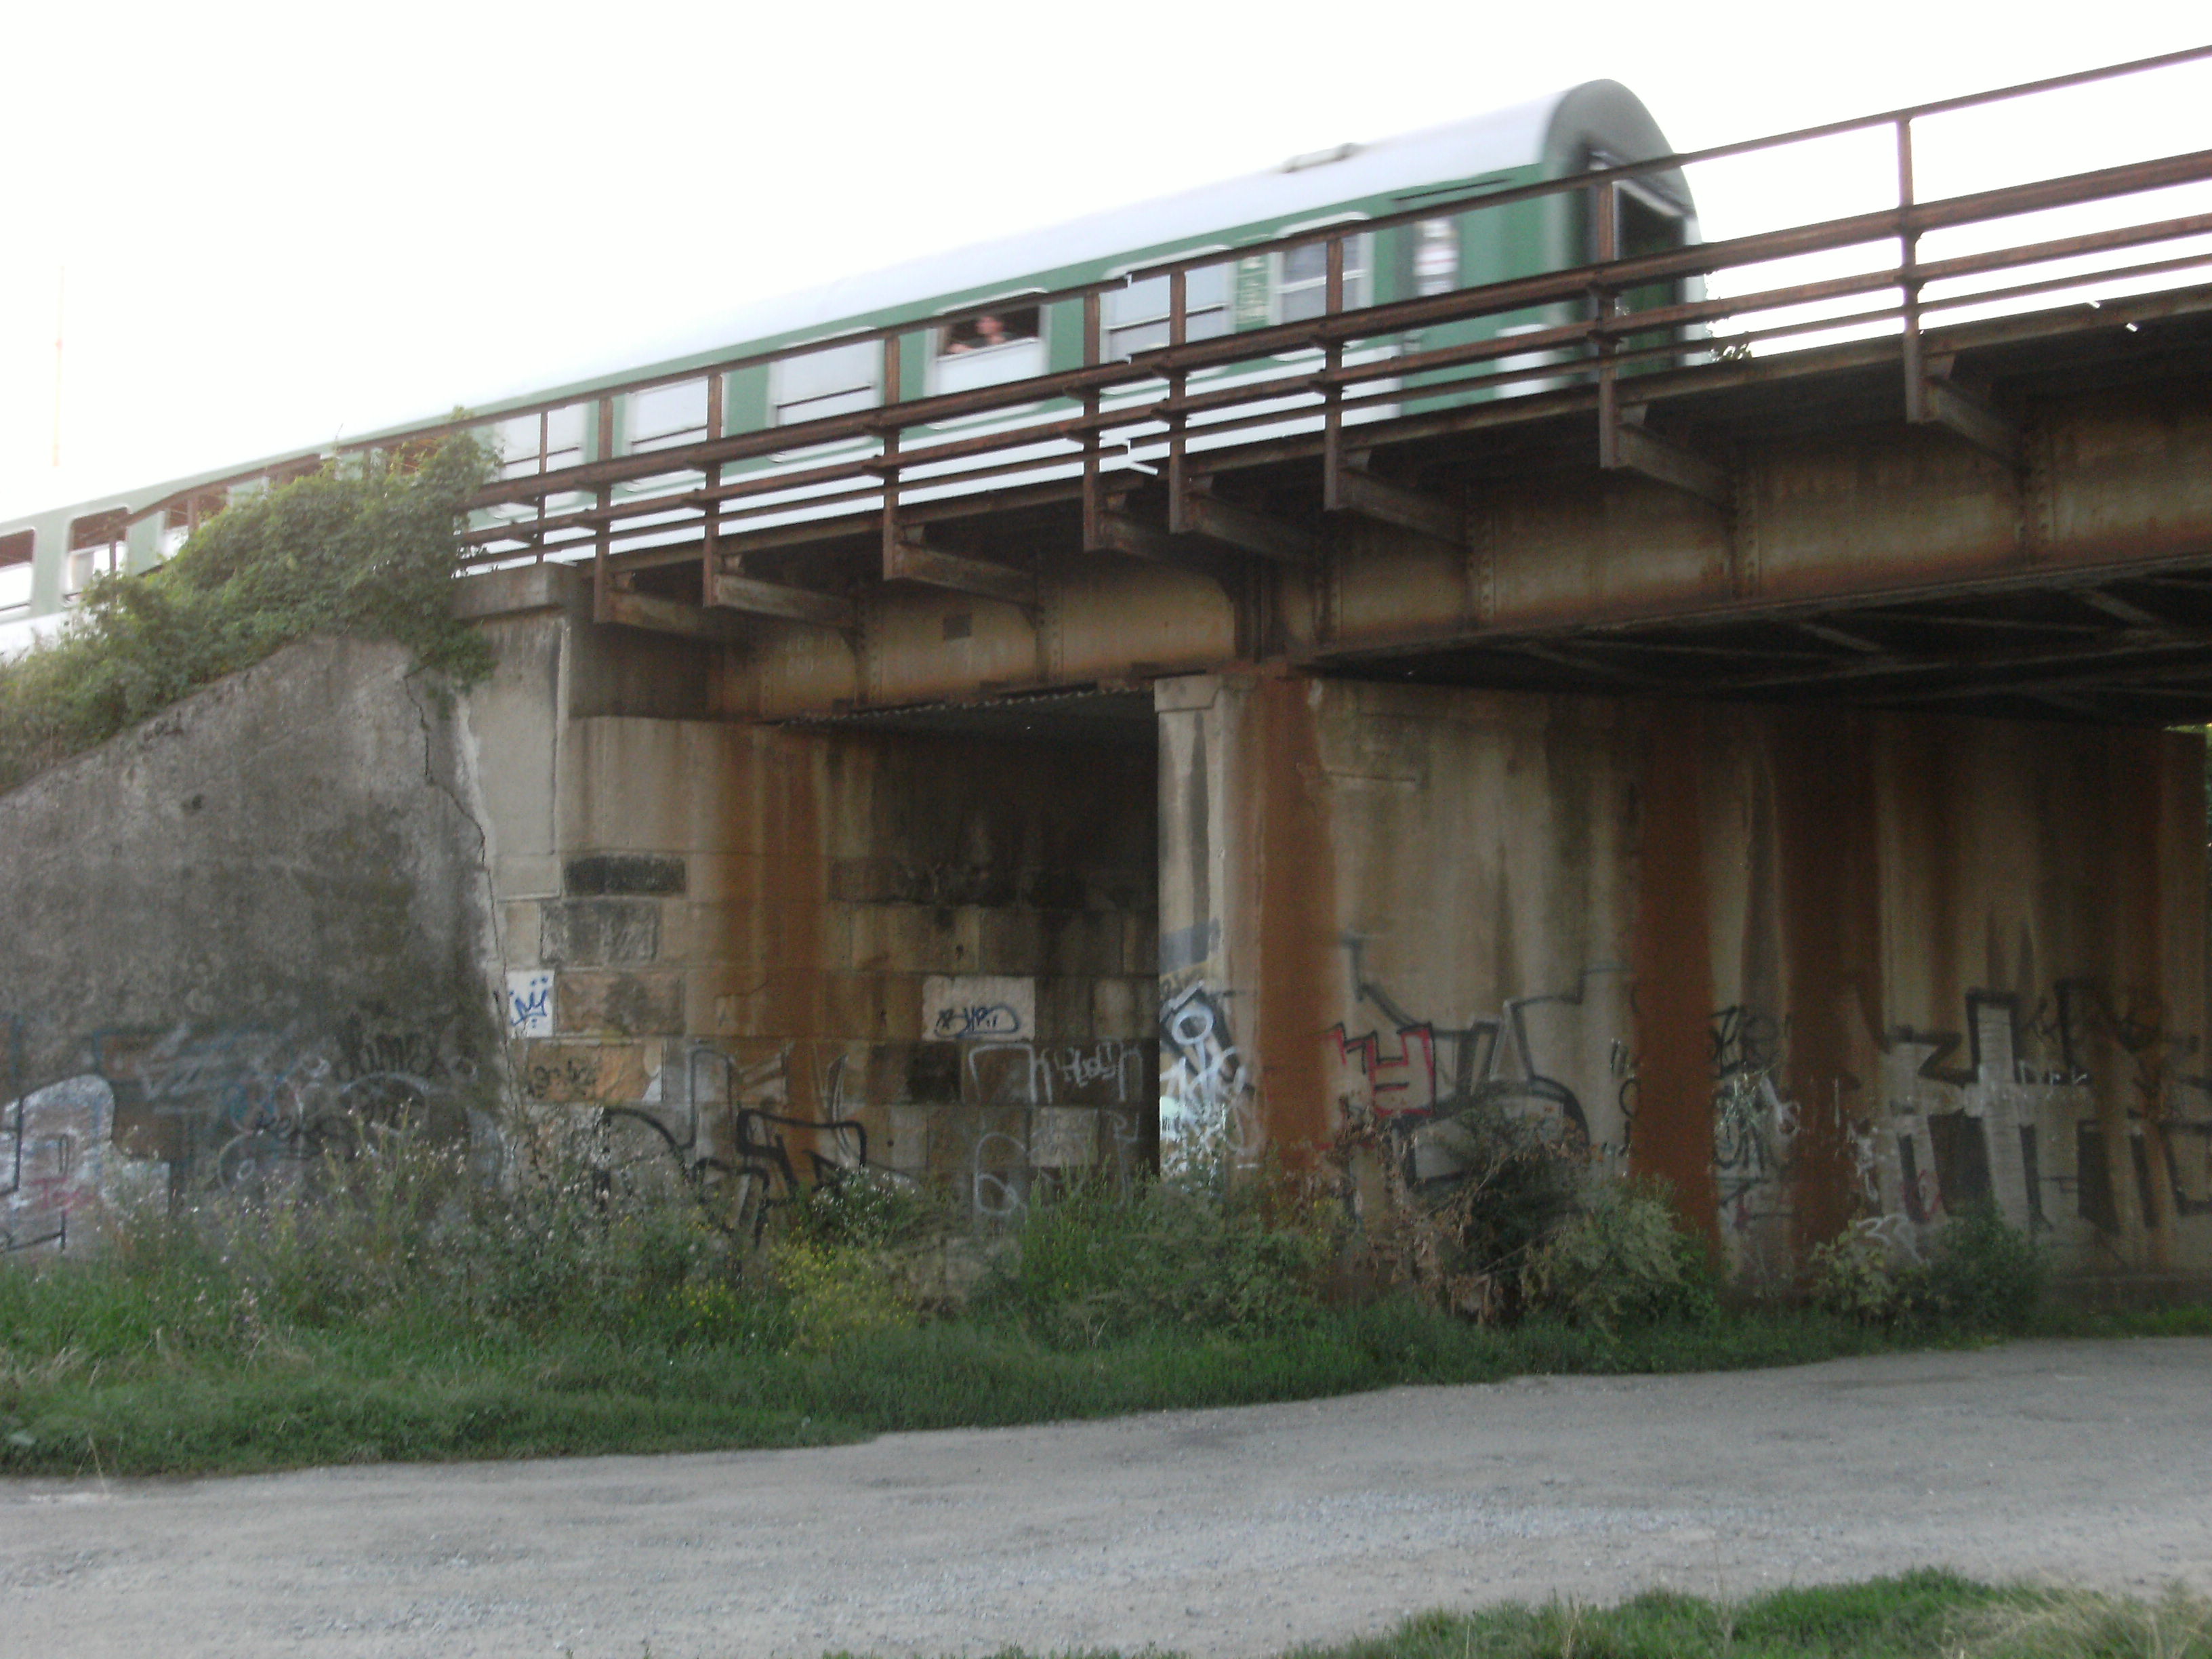 File:Bridge, graffiti, train, Brno.JPG - Wikimedia Commons